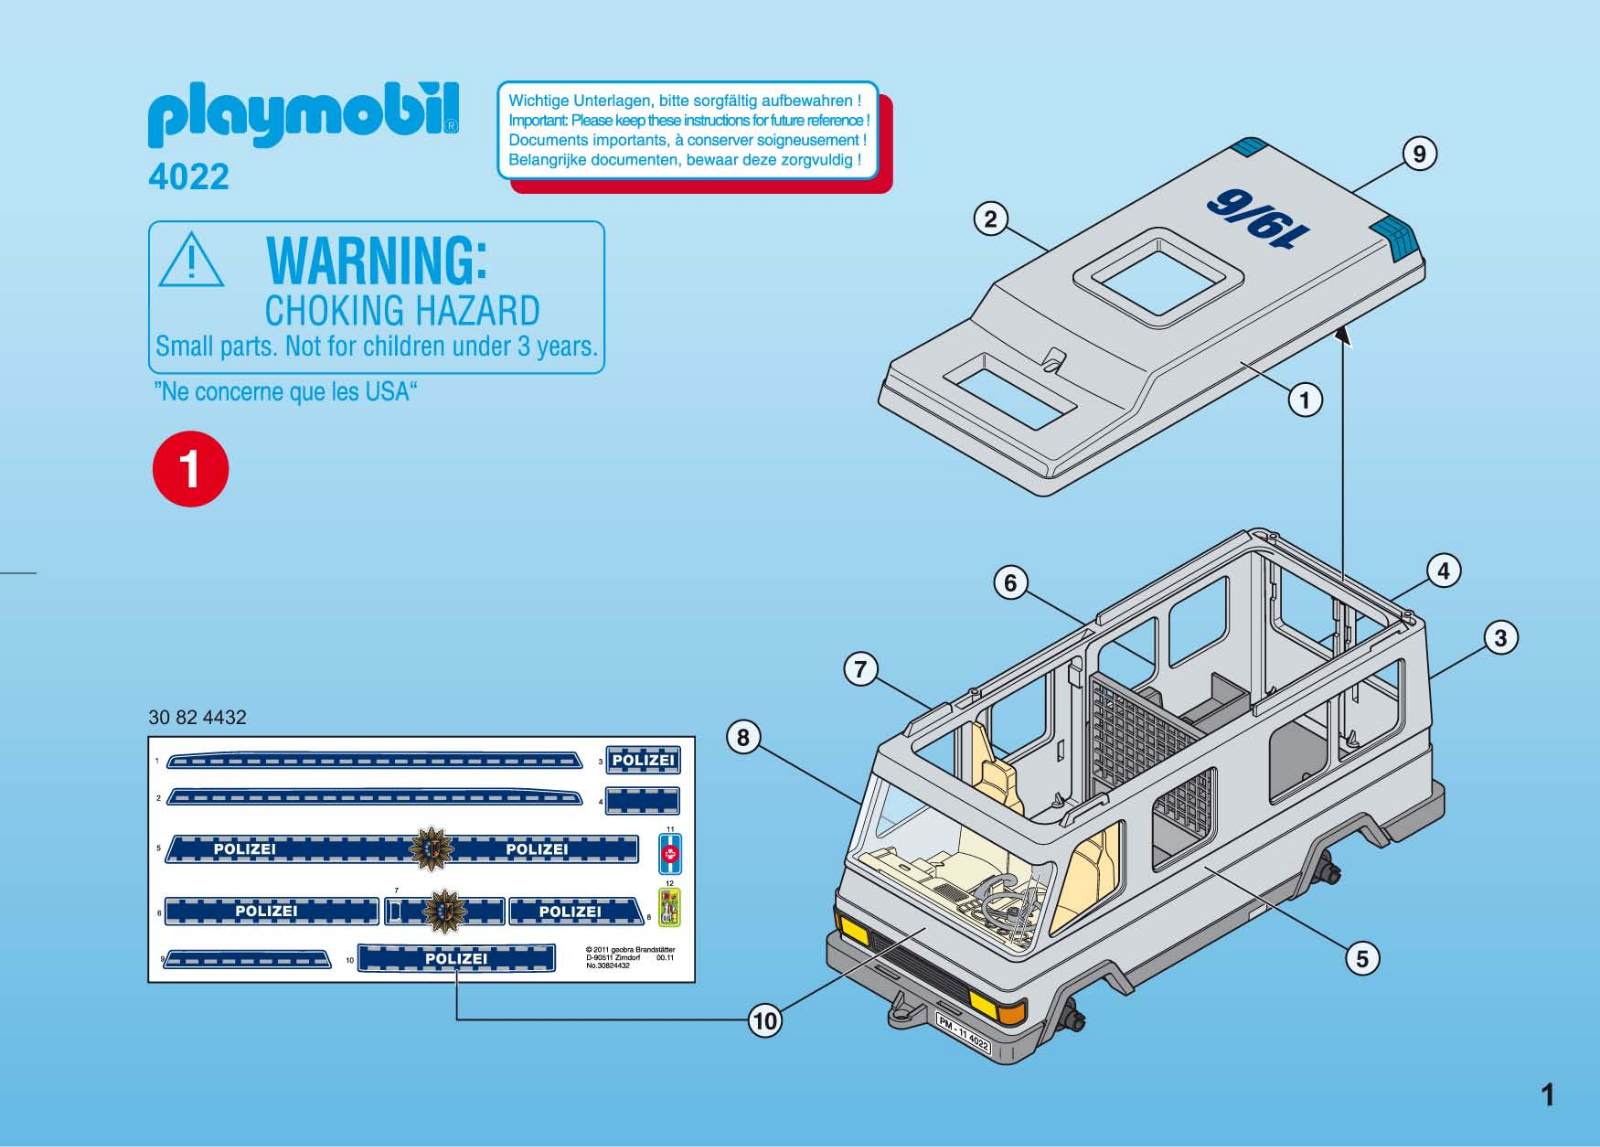 Playmobil 4022 Instructions